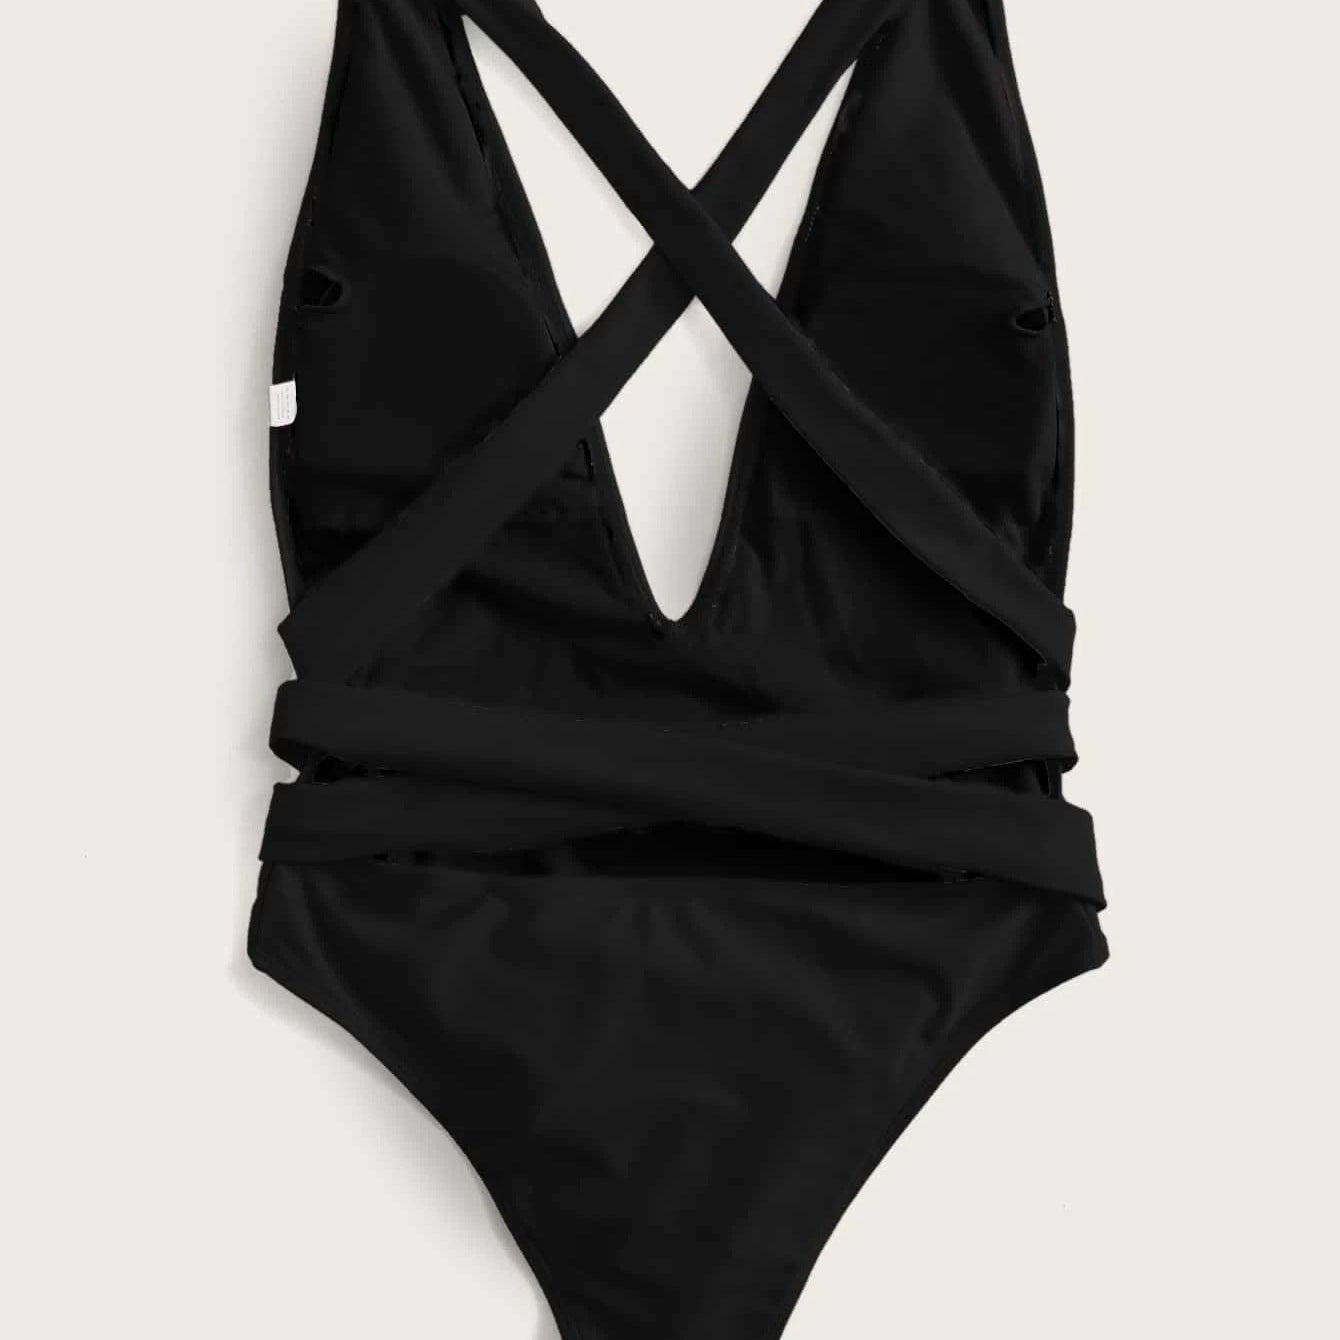 Women's Swimwear - 1PC Halter Neck Deep V Tied One-Piece Swimsuit